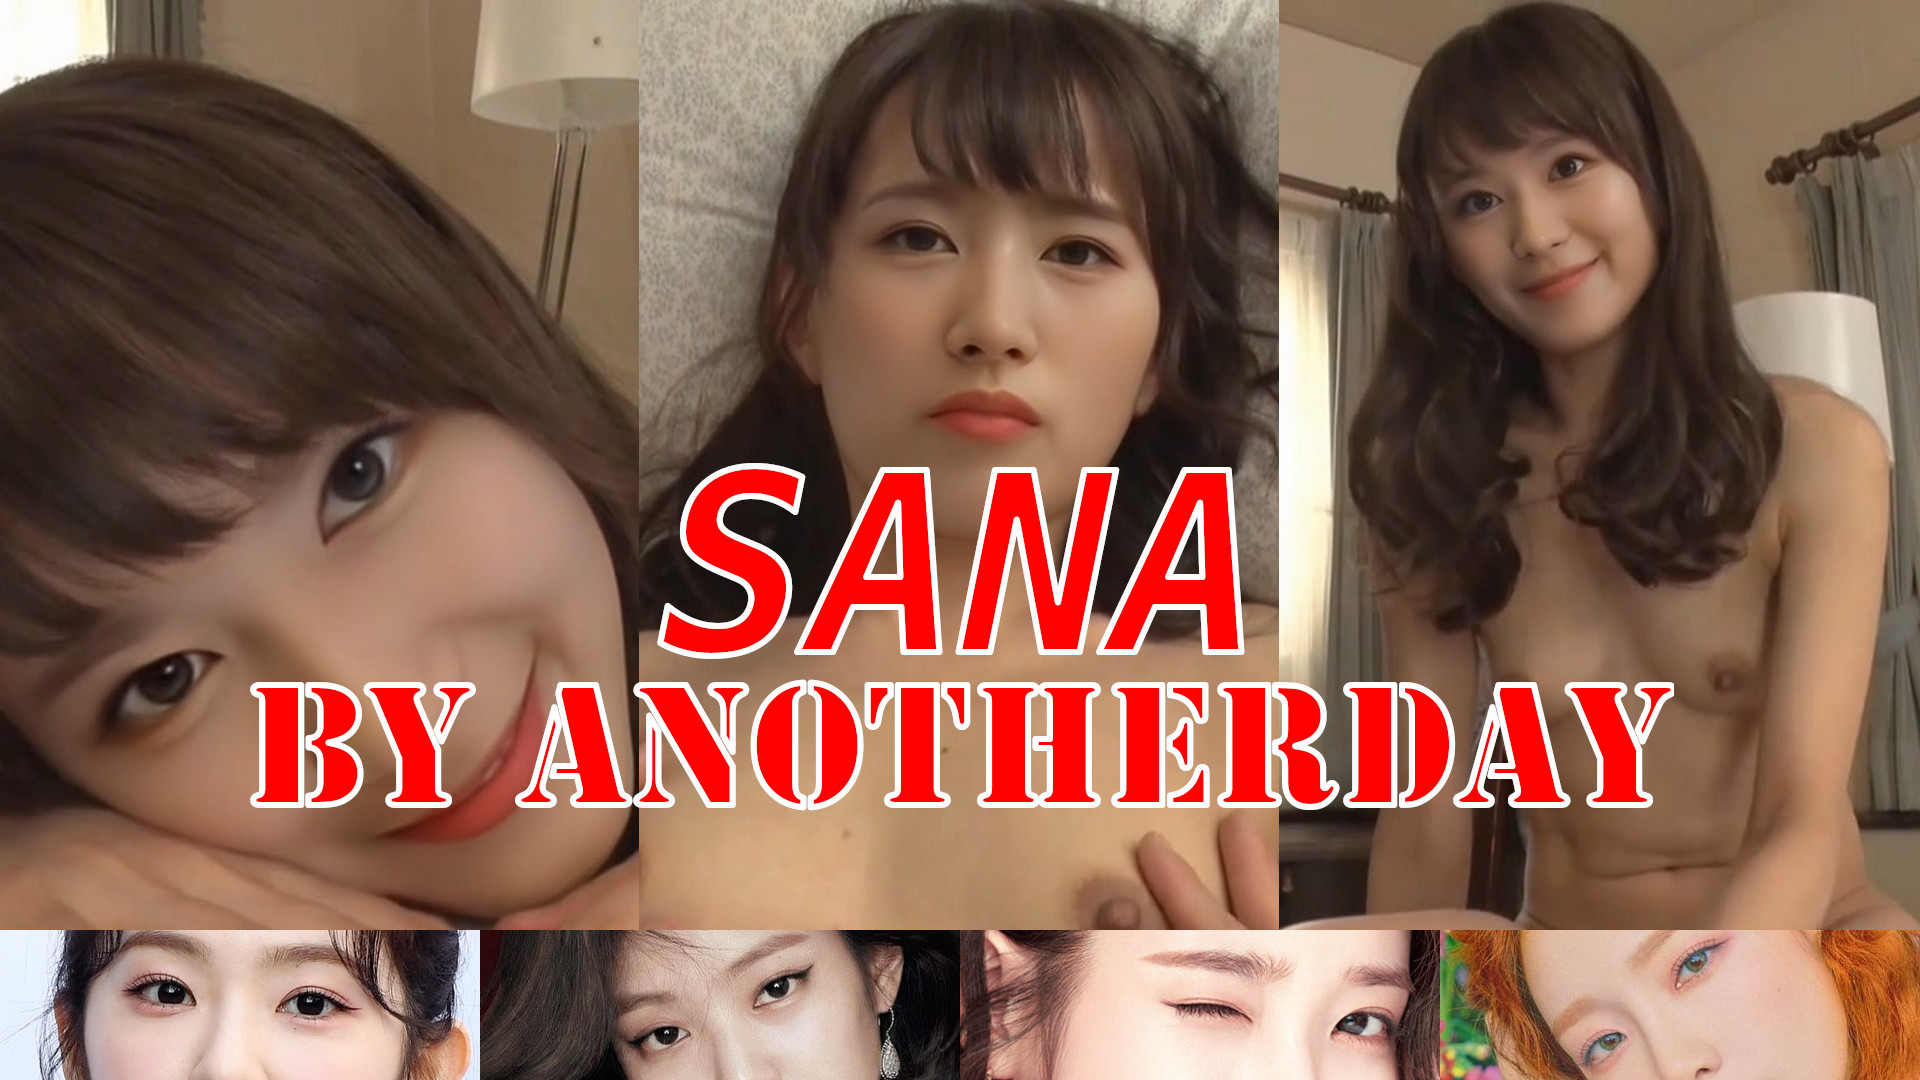 Sana [Twice] - Sister wants your cock